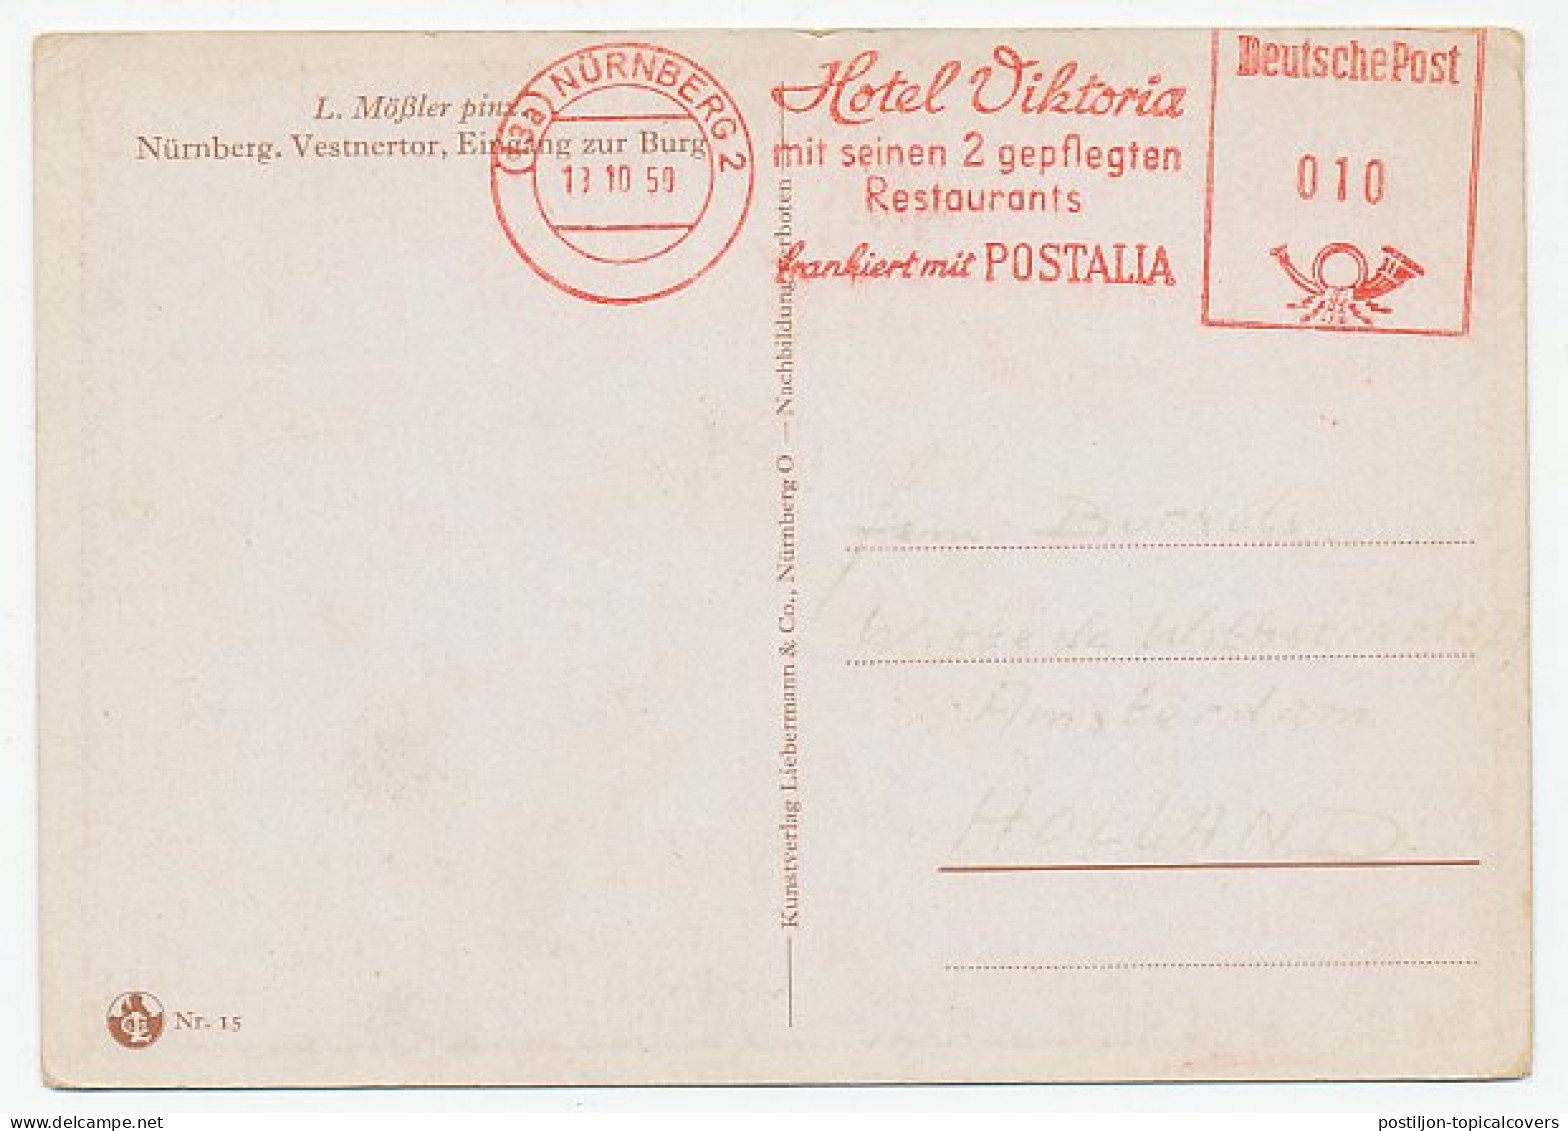 Meter Postcard Germany 1950 Franked With Postalia - Hotel Victoria - Viñetas De Franqueo [ATM]